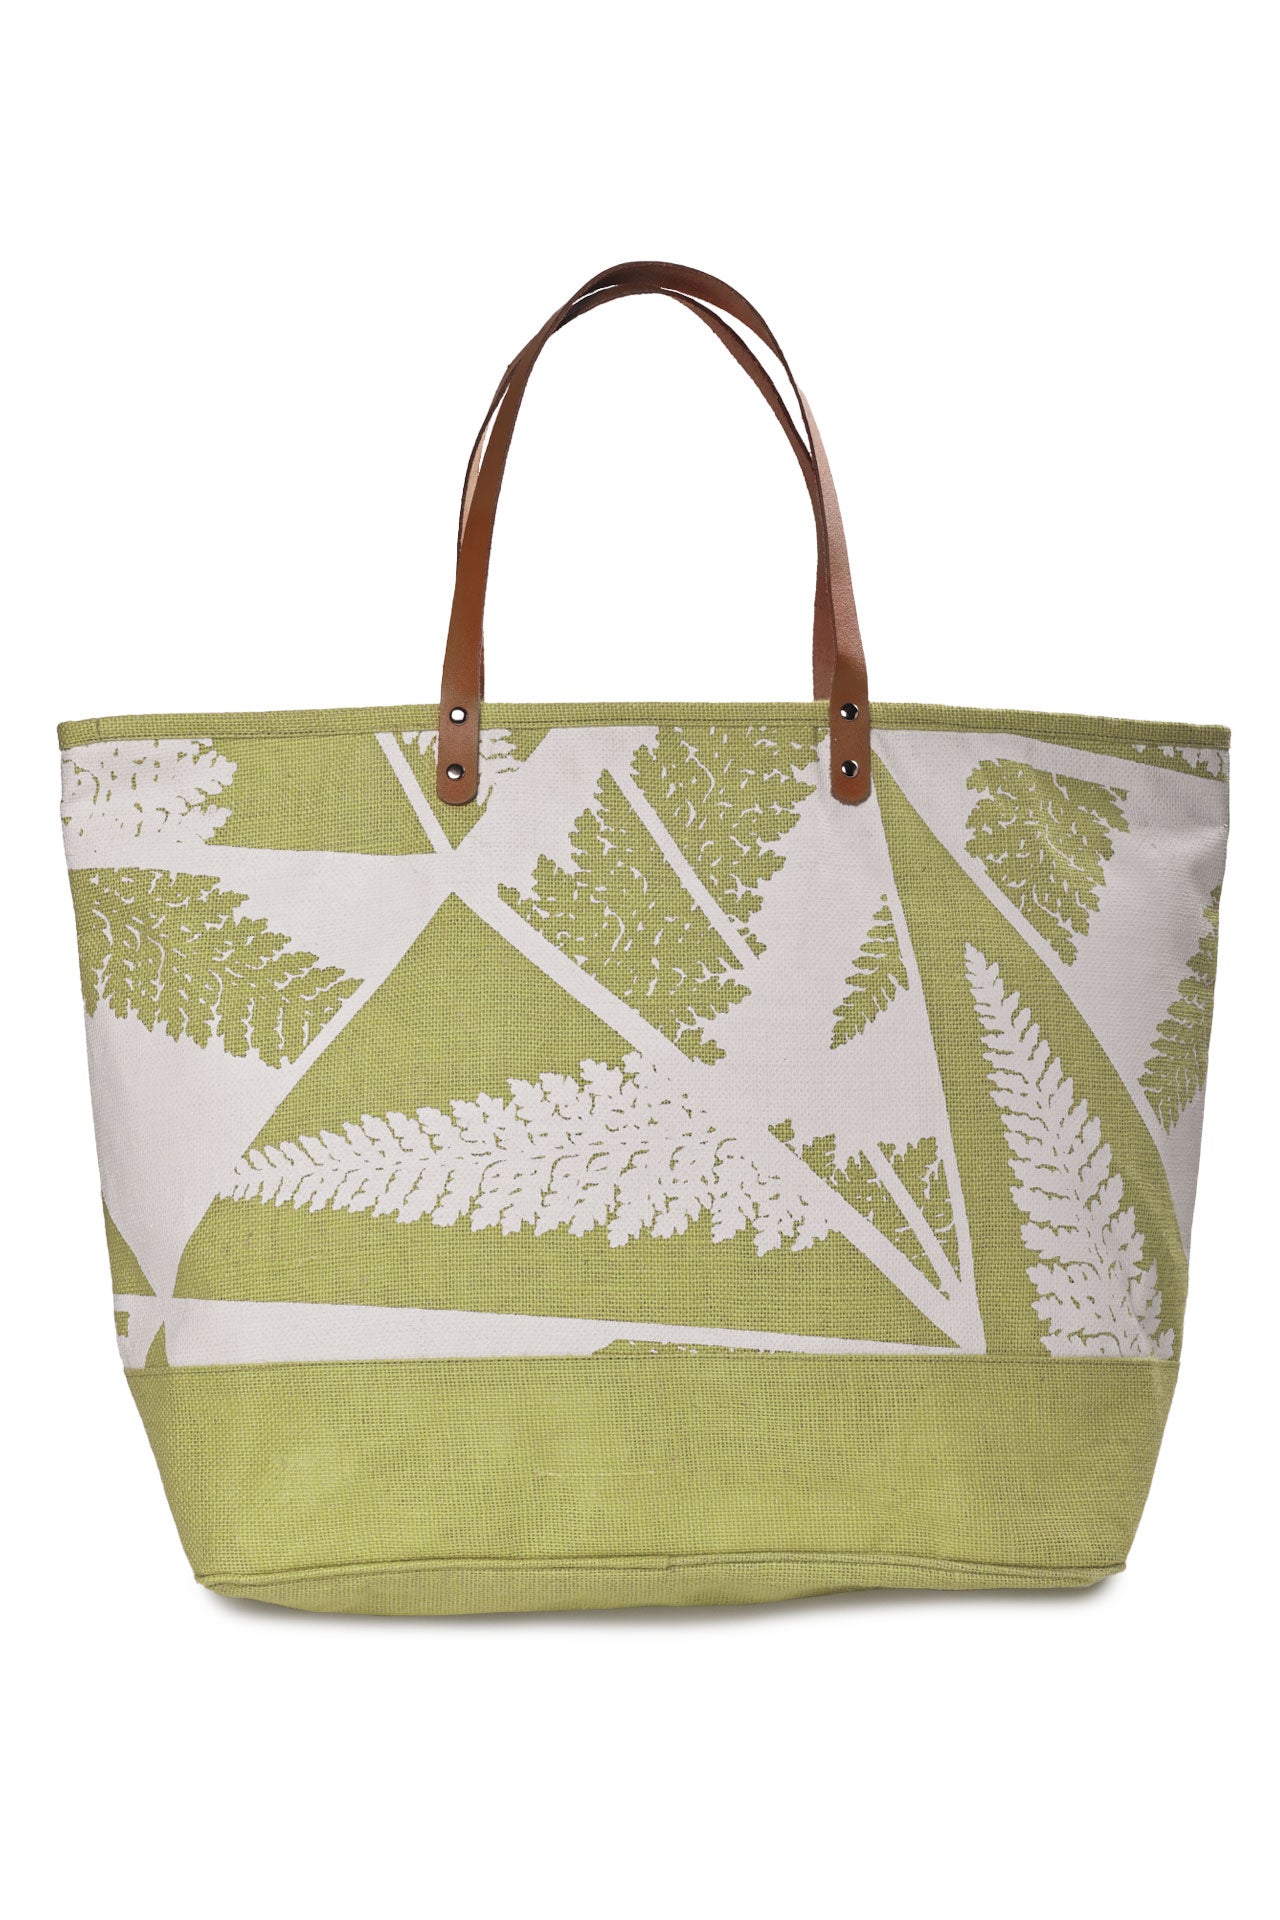 Pop-Up Mākeke - Manaola - Kahaone Tote Bag Set - Palapalai Abstract in Celadon Green